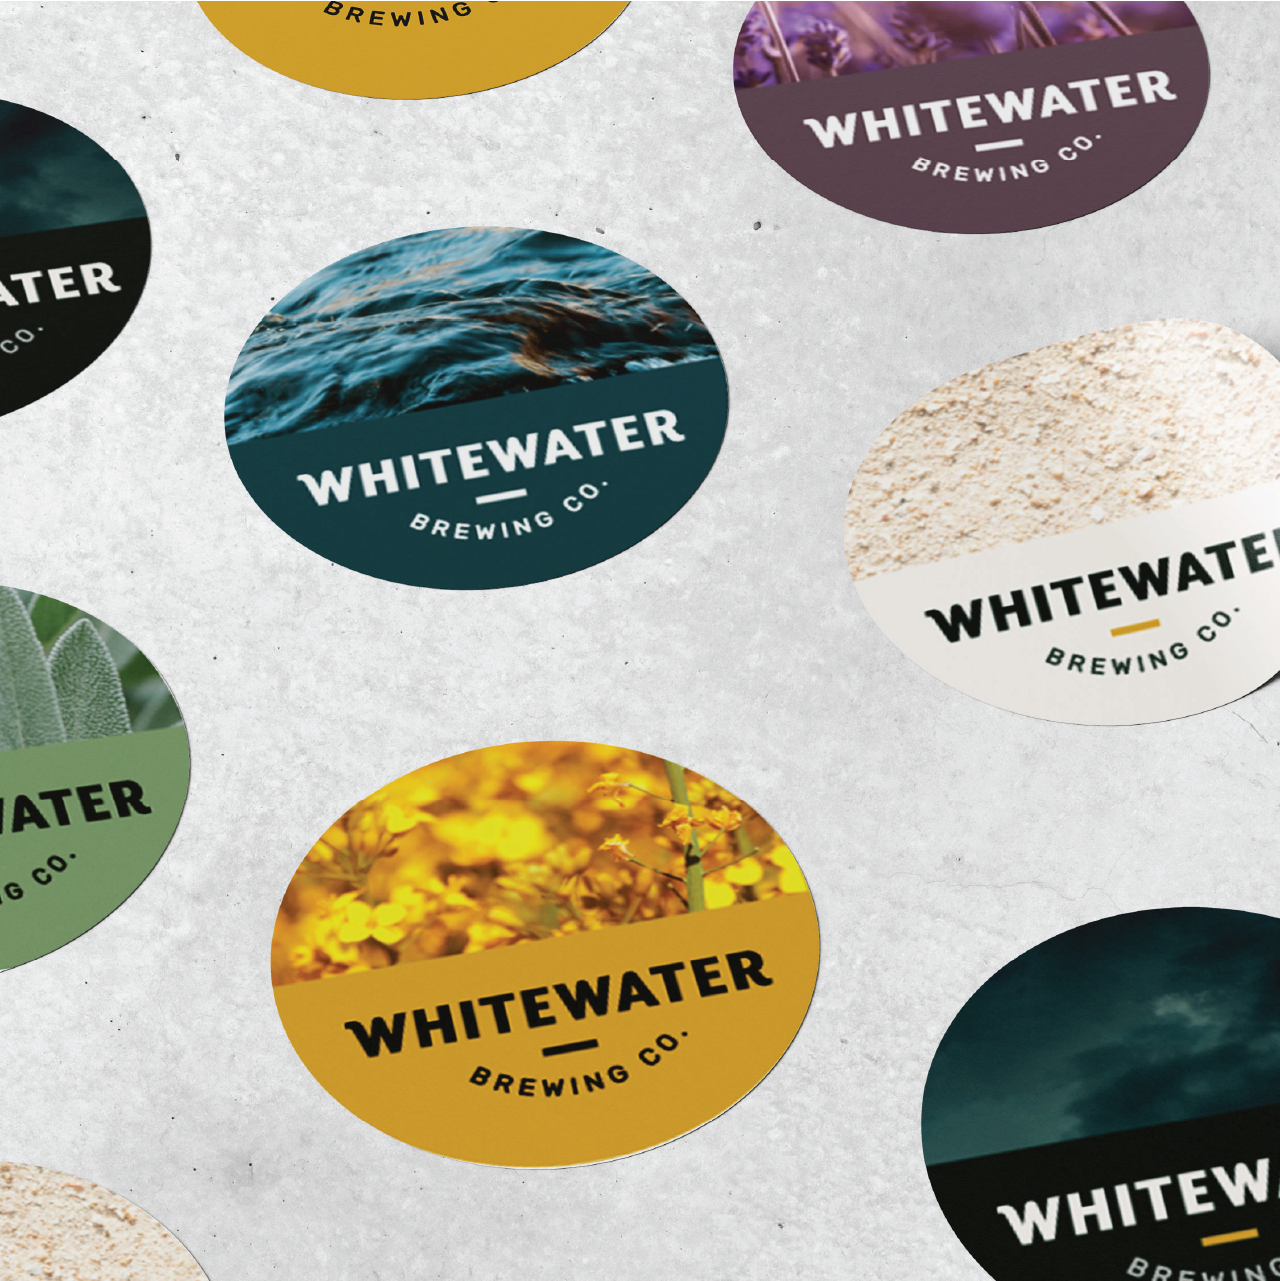 Whitewater sticker samples